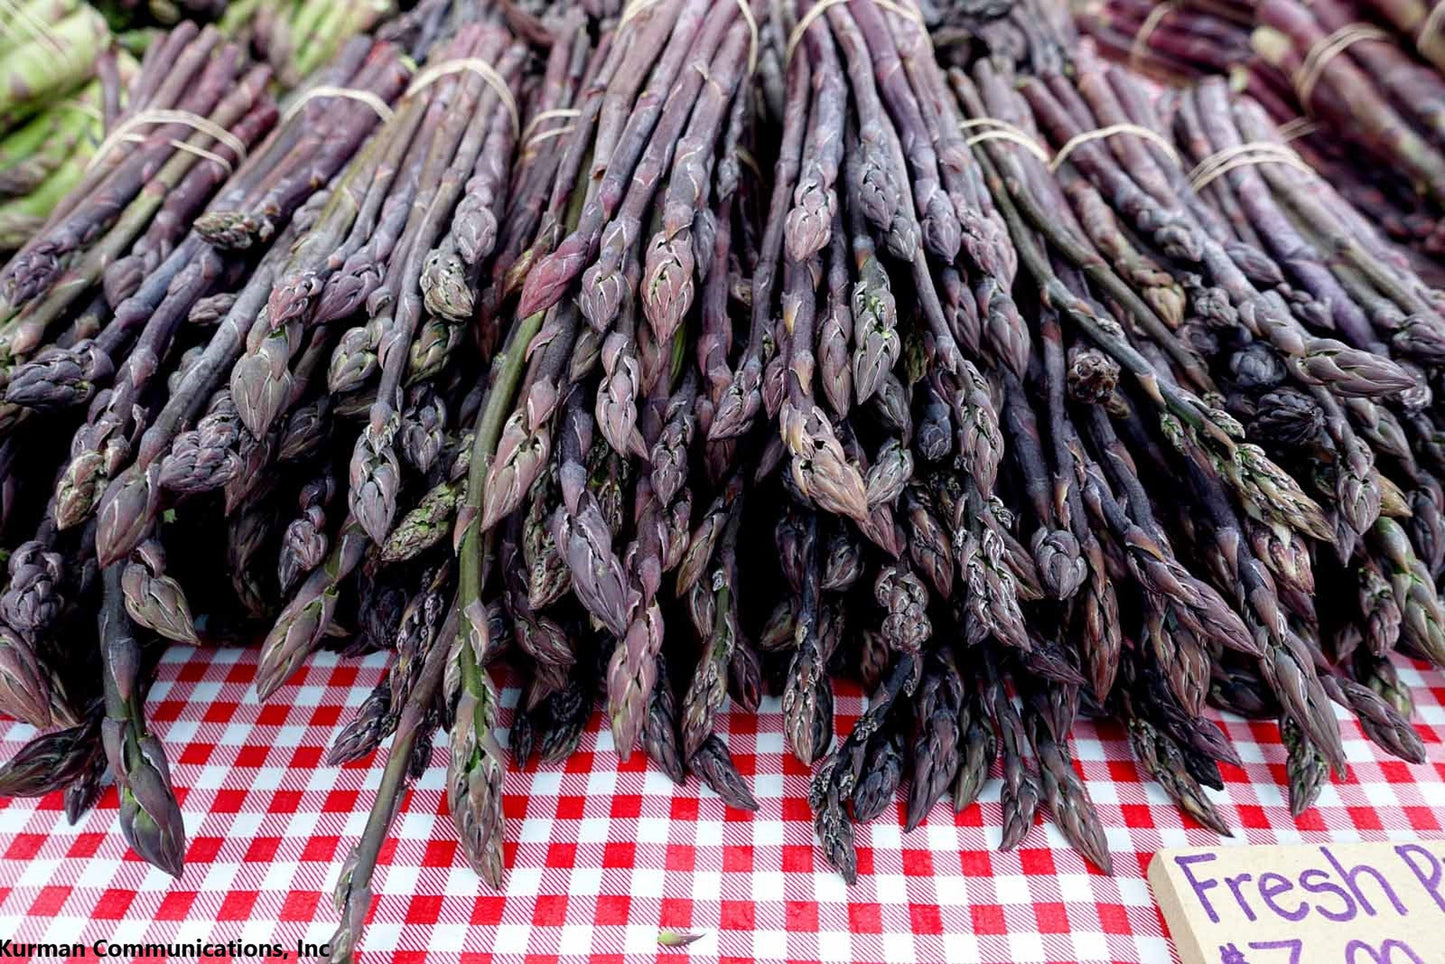 Sweet Purple Asparagus - Organic Vegetable - Gourmet - Rare - 10 Seeds